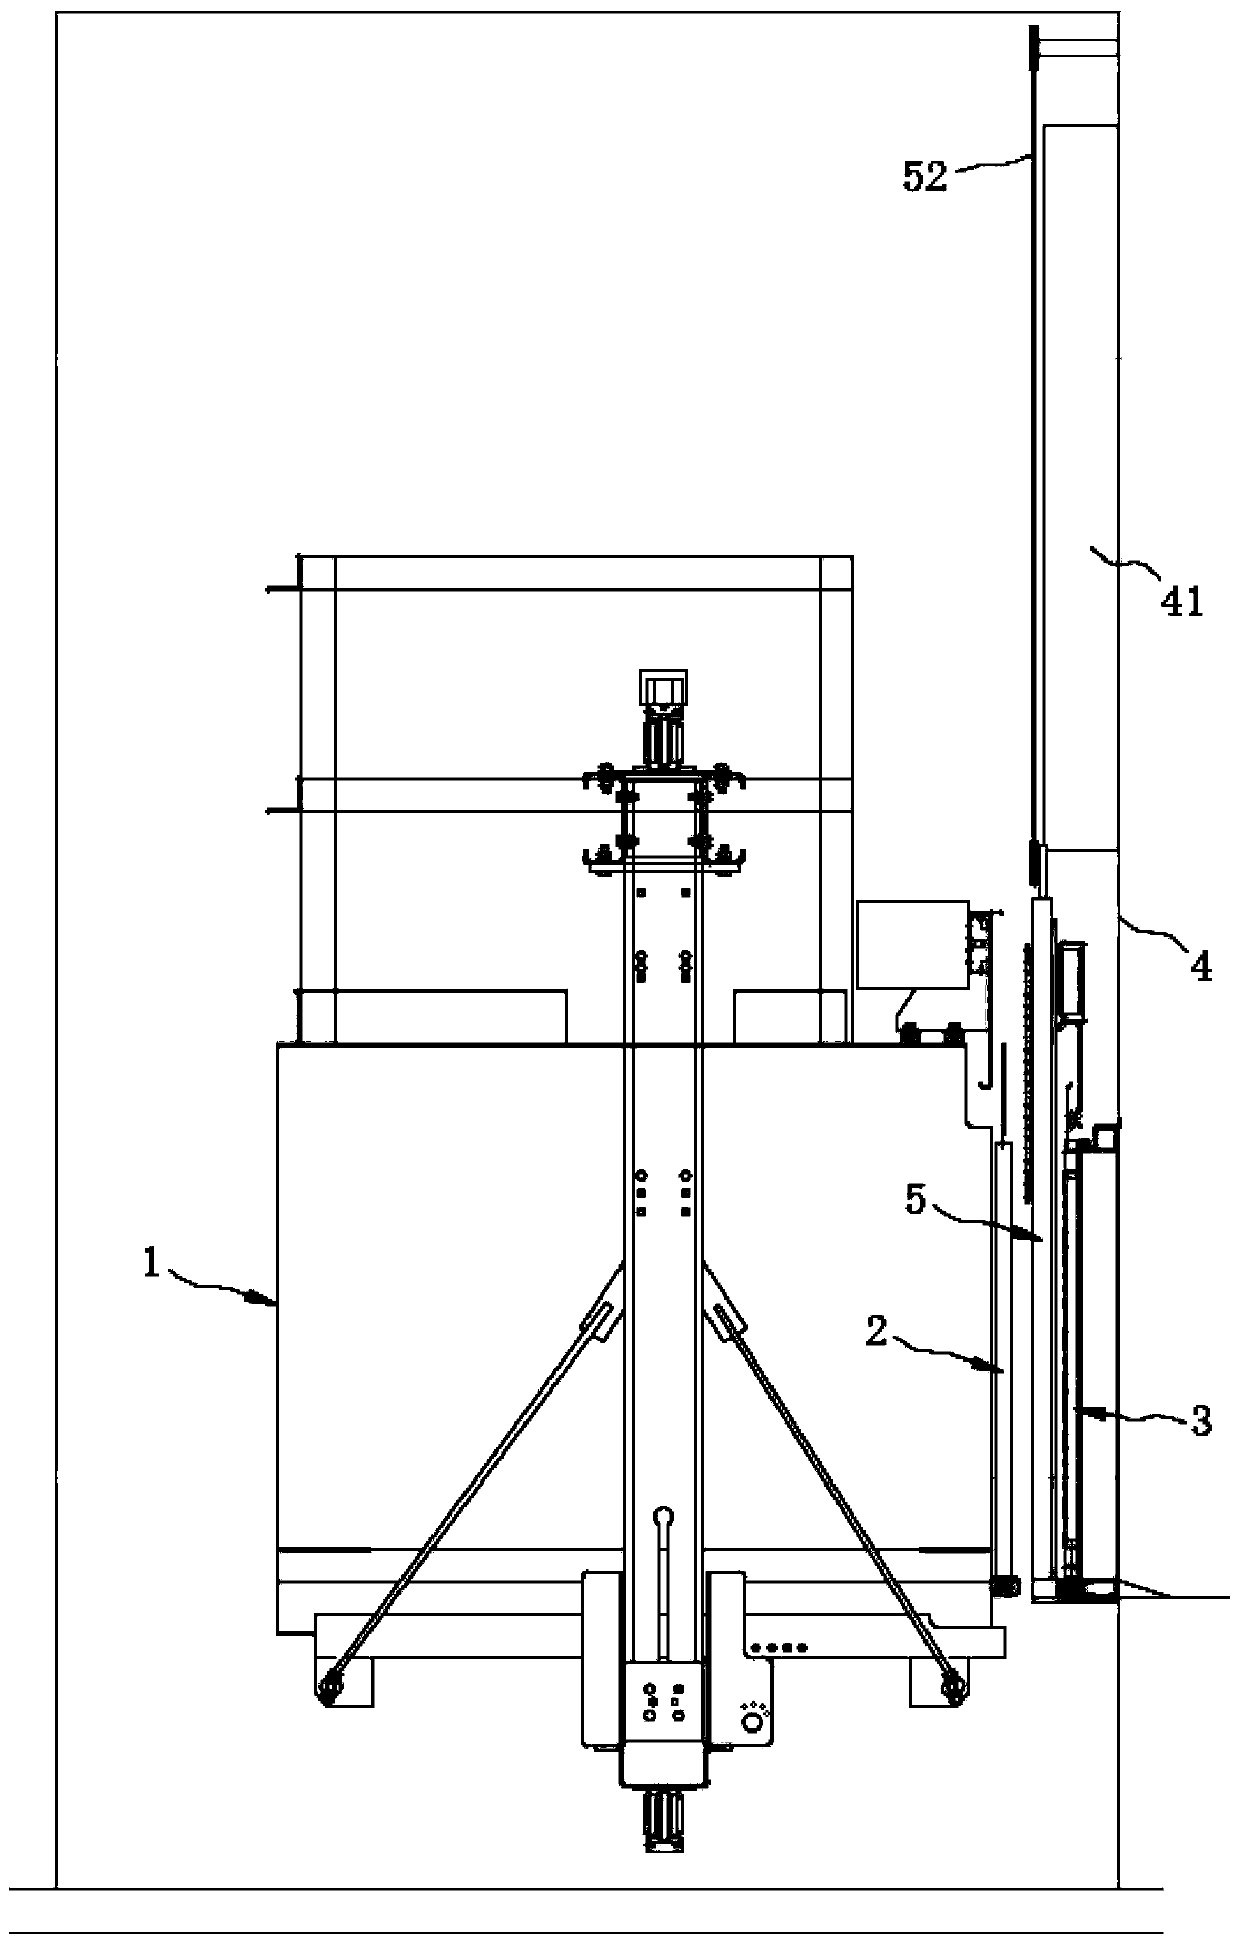 Marine elevator watertight method and structure